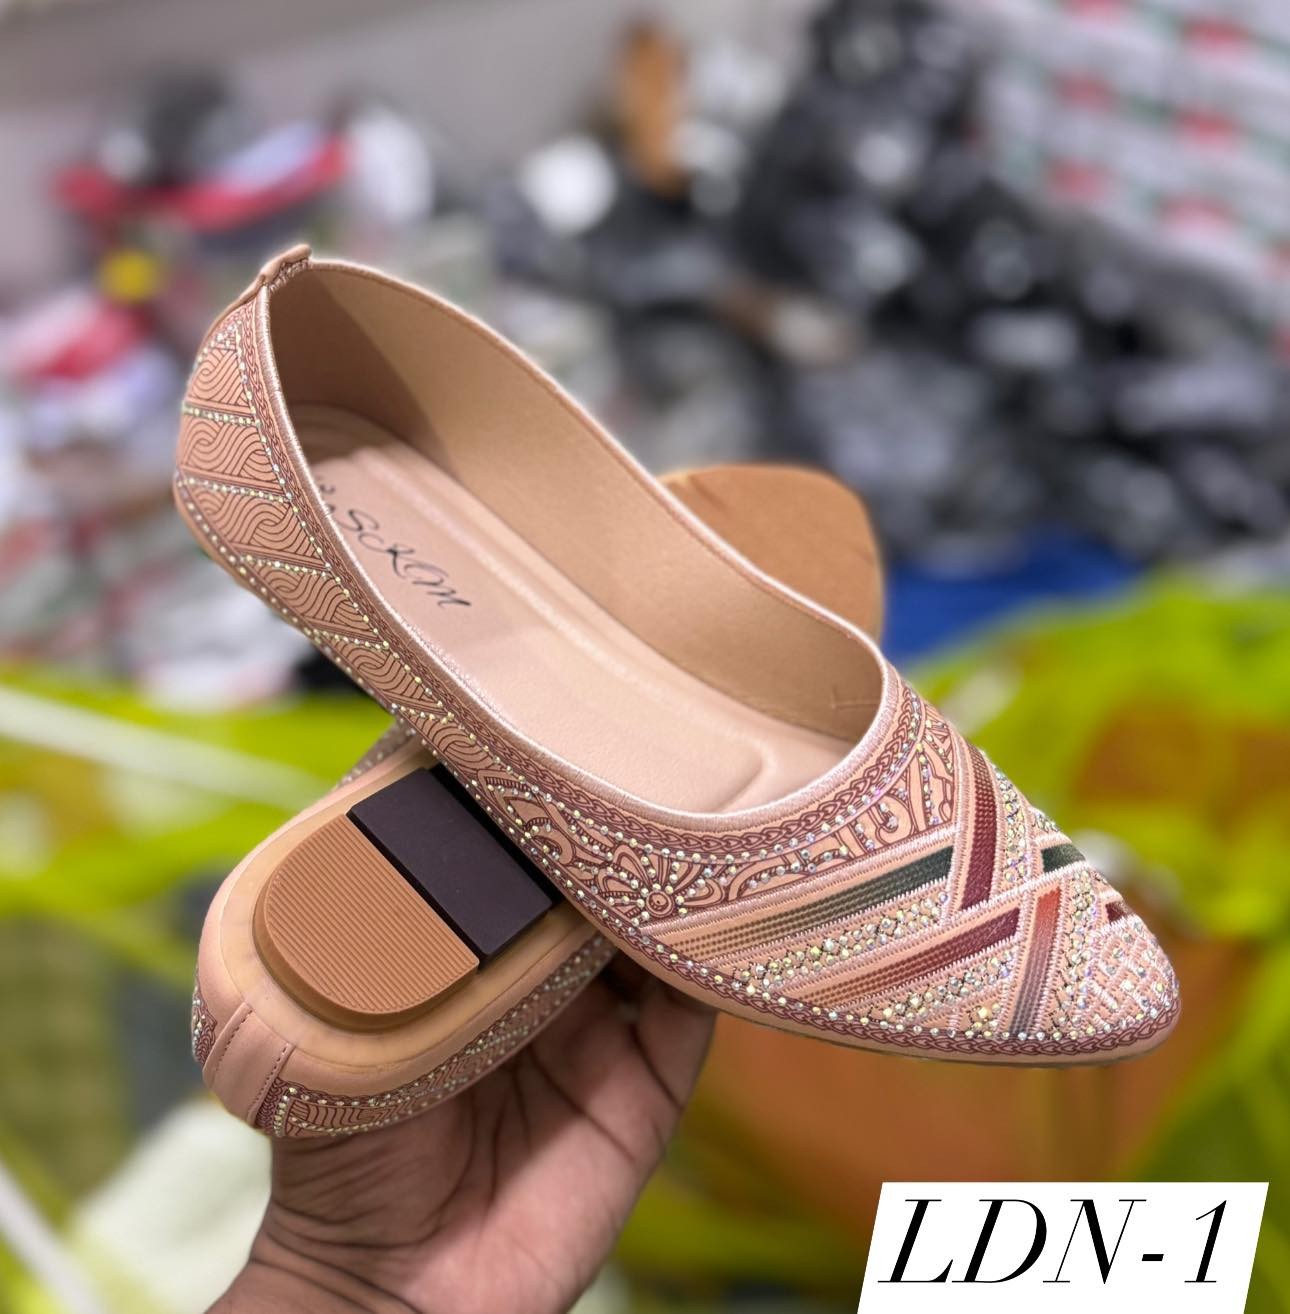 Exclusive ladies shoe (LDN 1)